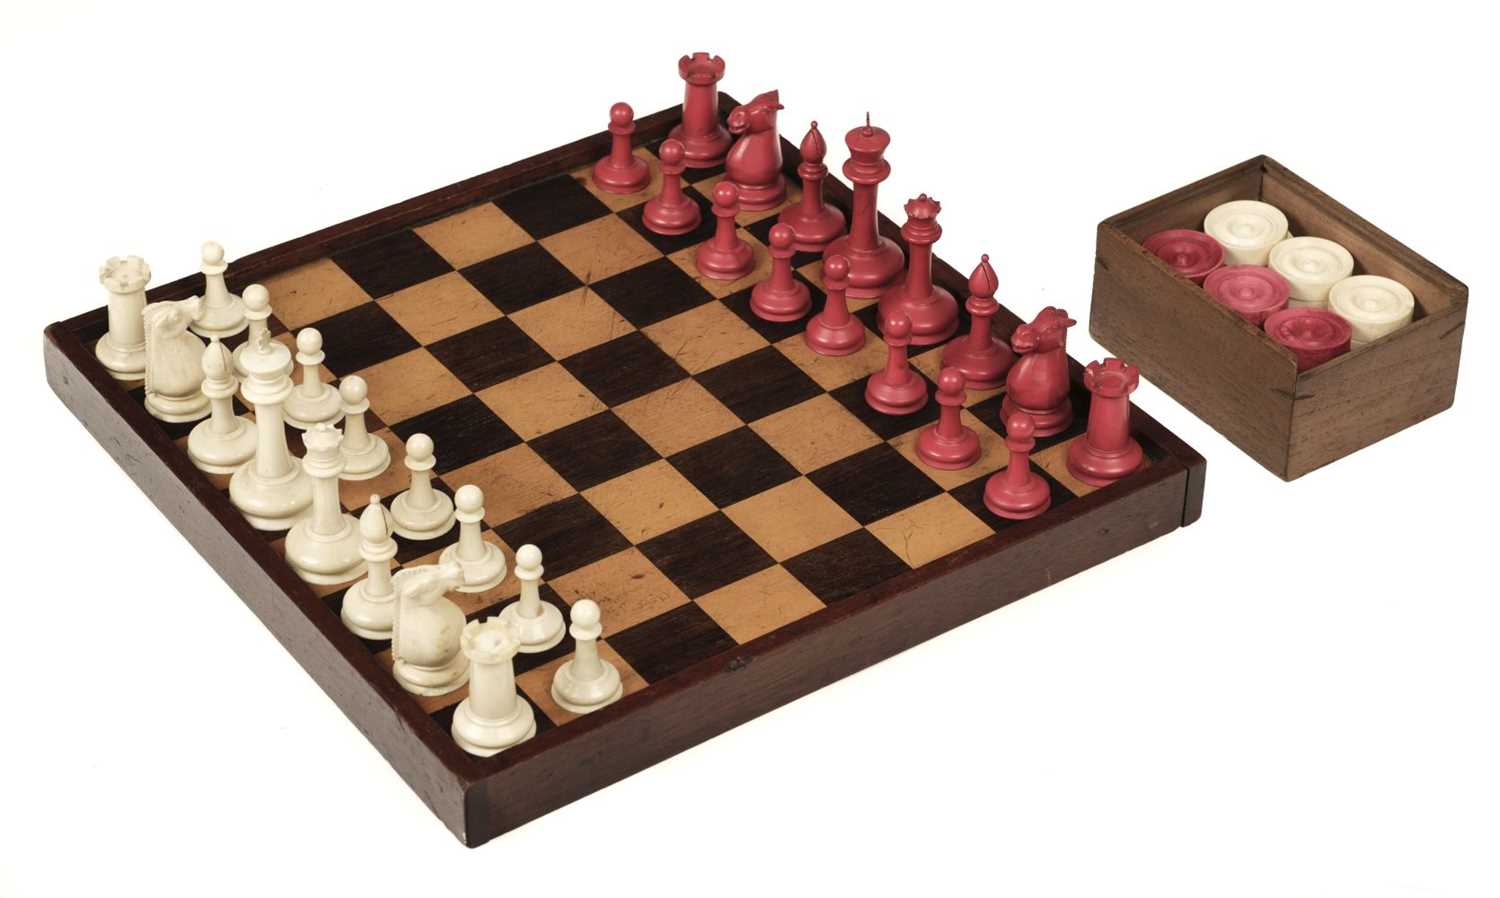 Lot 250 - Chess. A 19th-century ivory "Staunton" pattern chess set